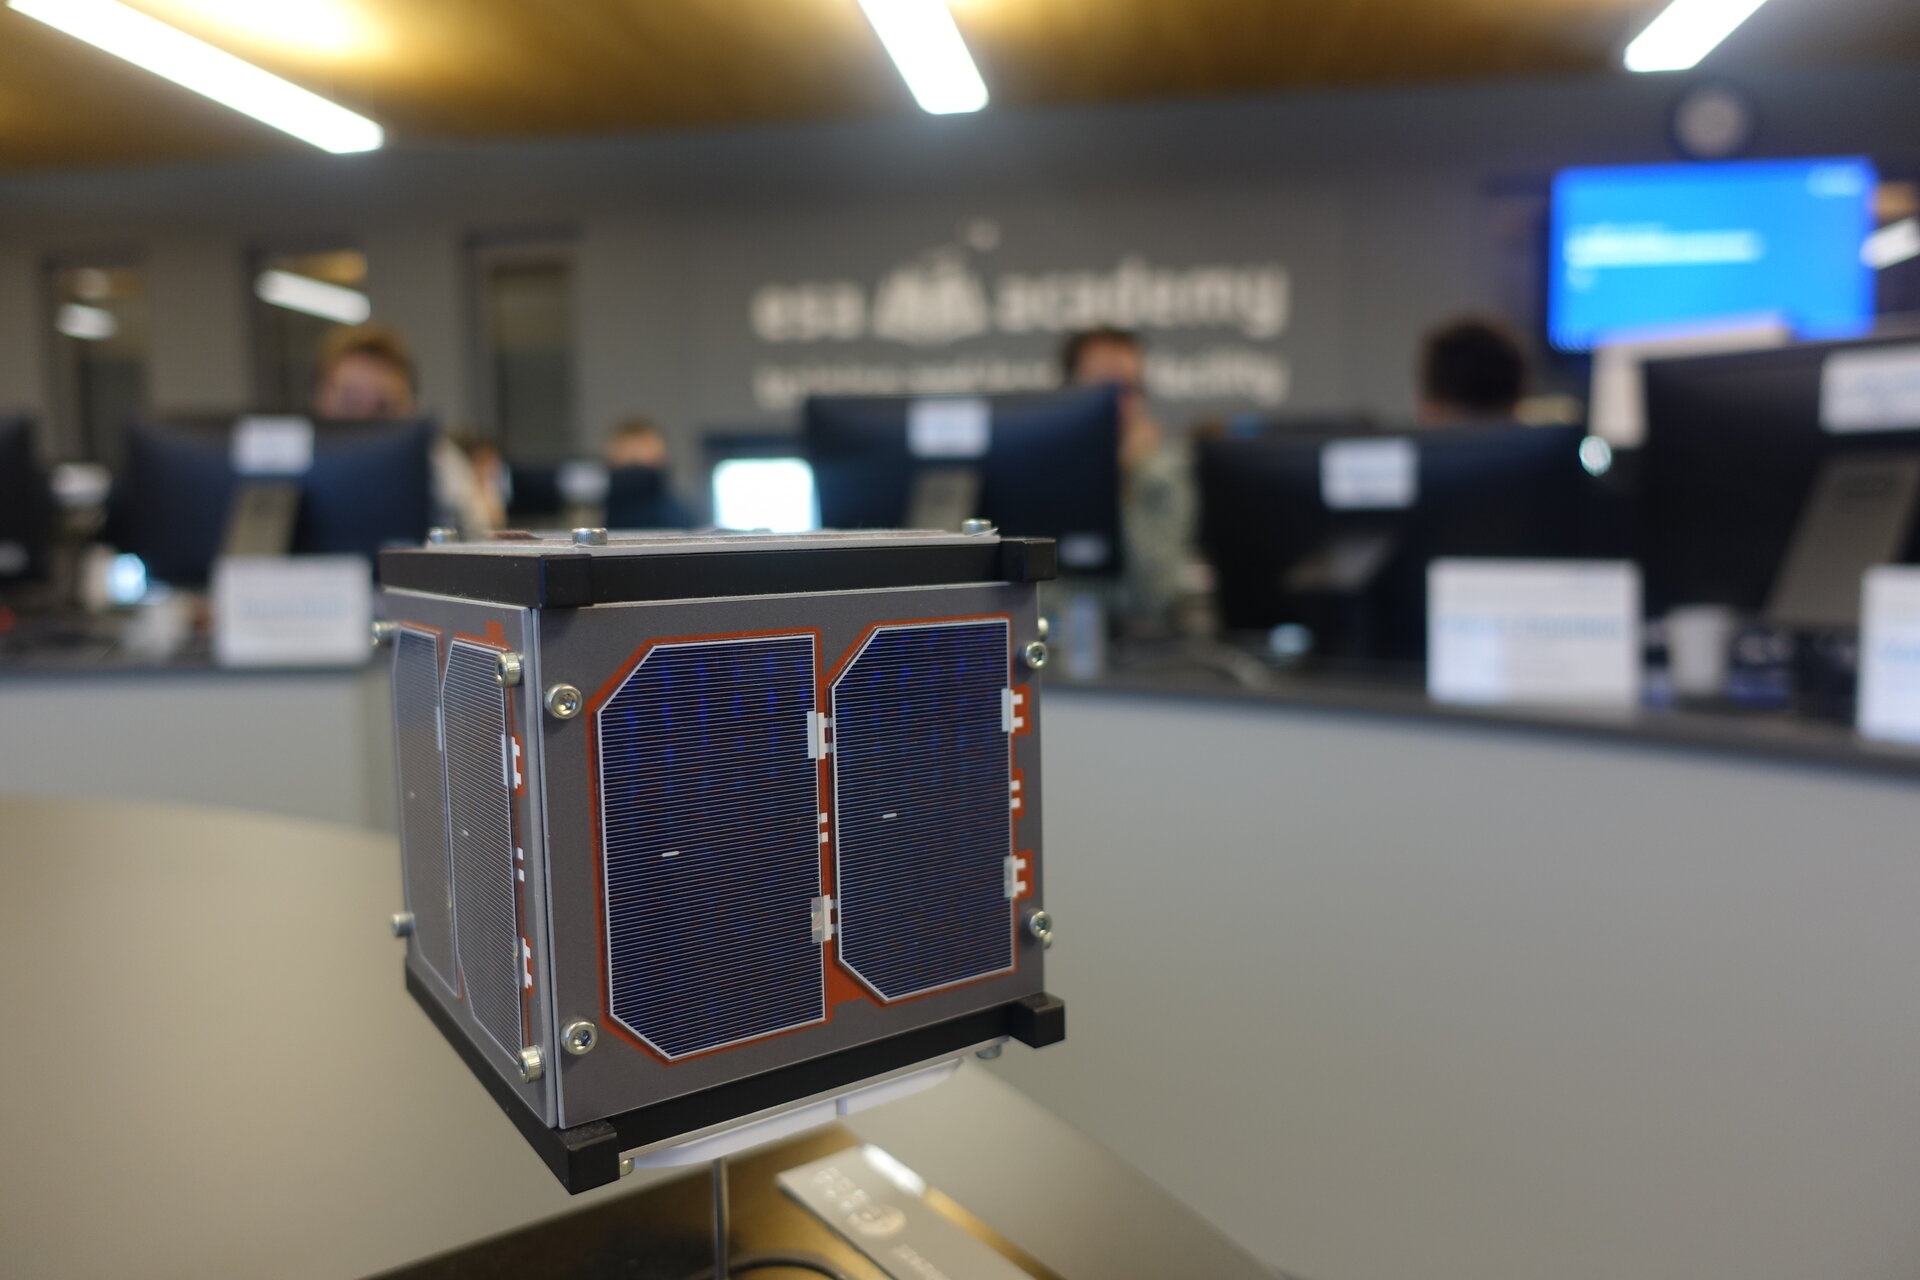 CubeSat model used as an education tool